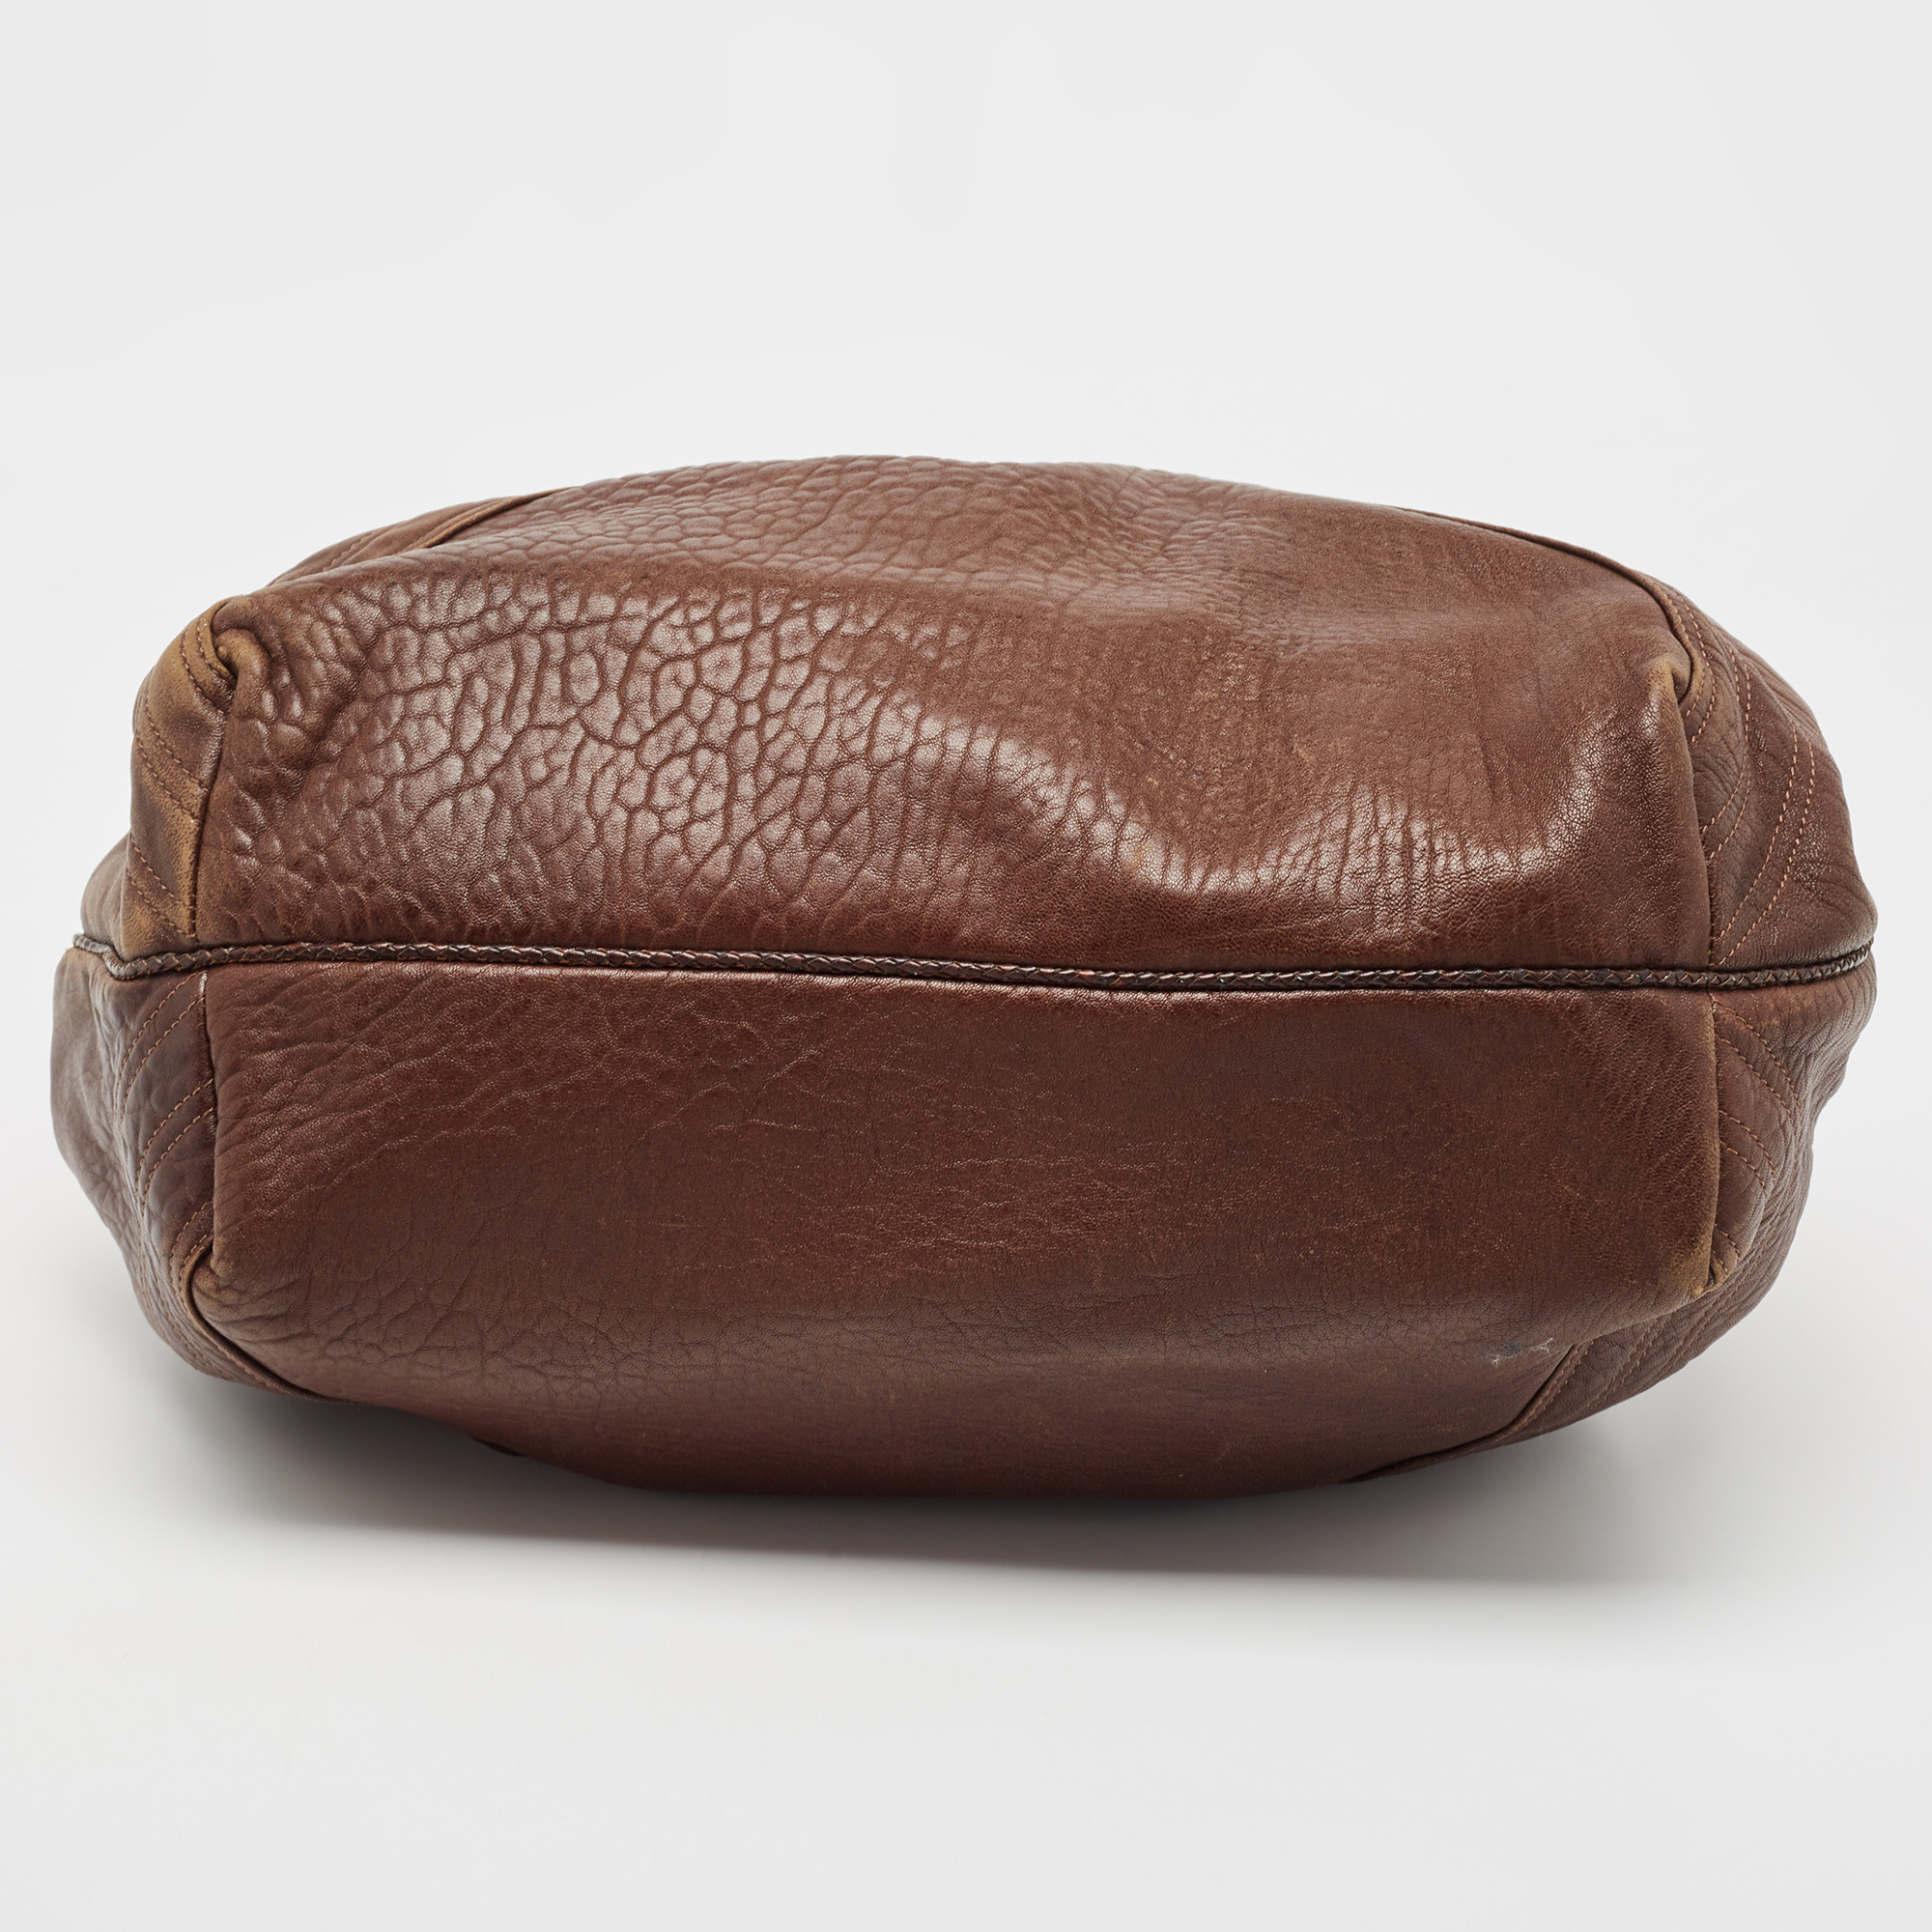 Fendi Brown Pebbled Leather Spy Bag